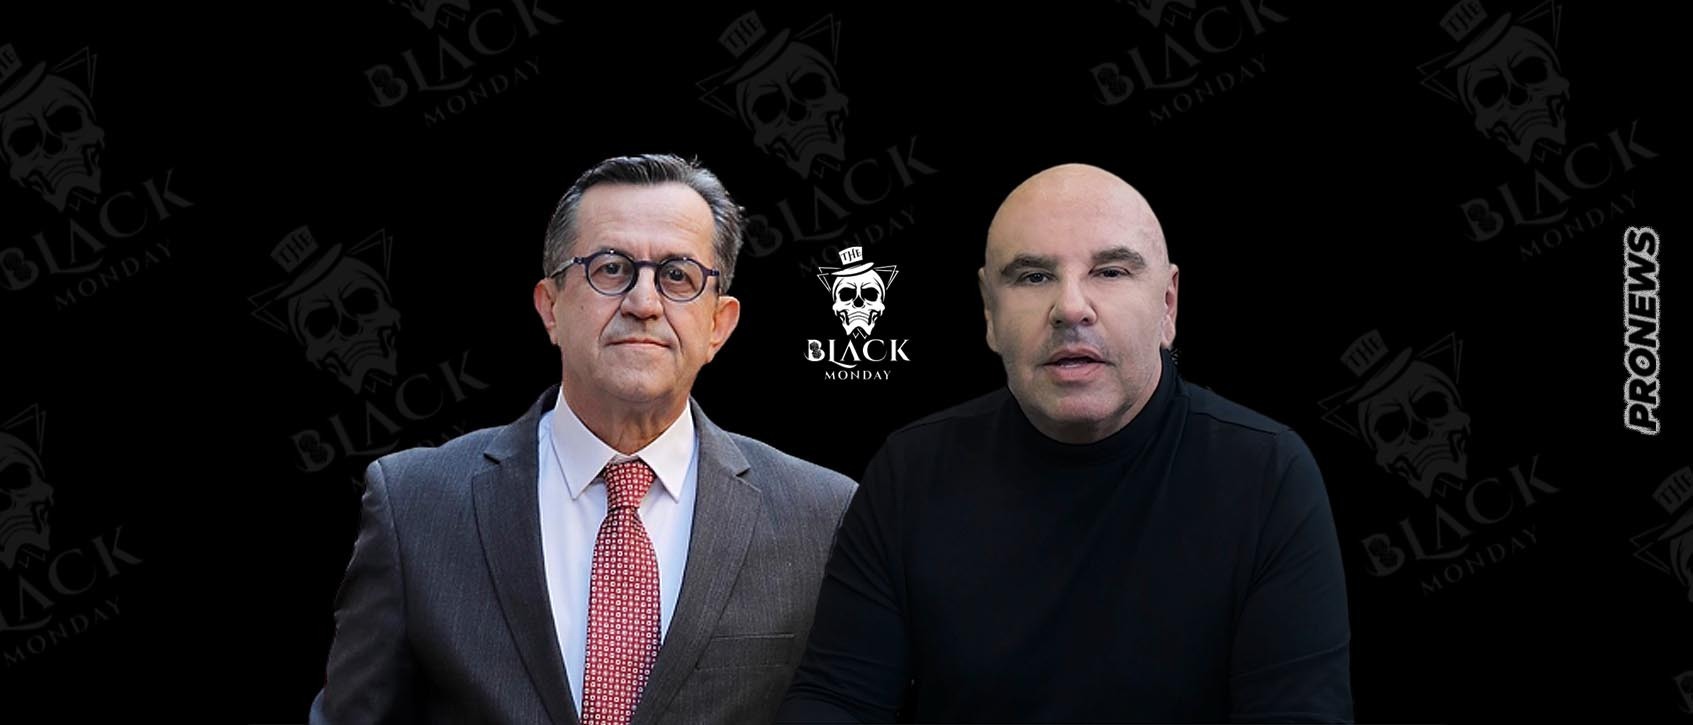 O Νίκος Νικολόπουλος στο “Black Monday” με τον Τάσο Γκουριώτη: «Οι επόμενες εκλογές θα κρίνουν τα πάντα»…